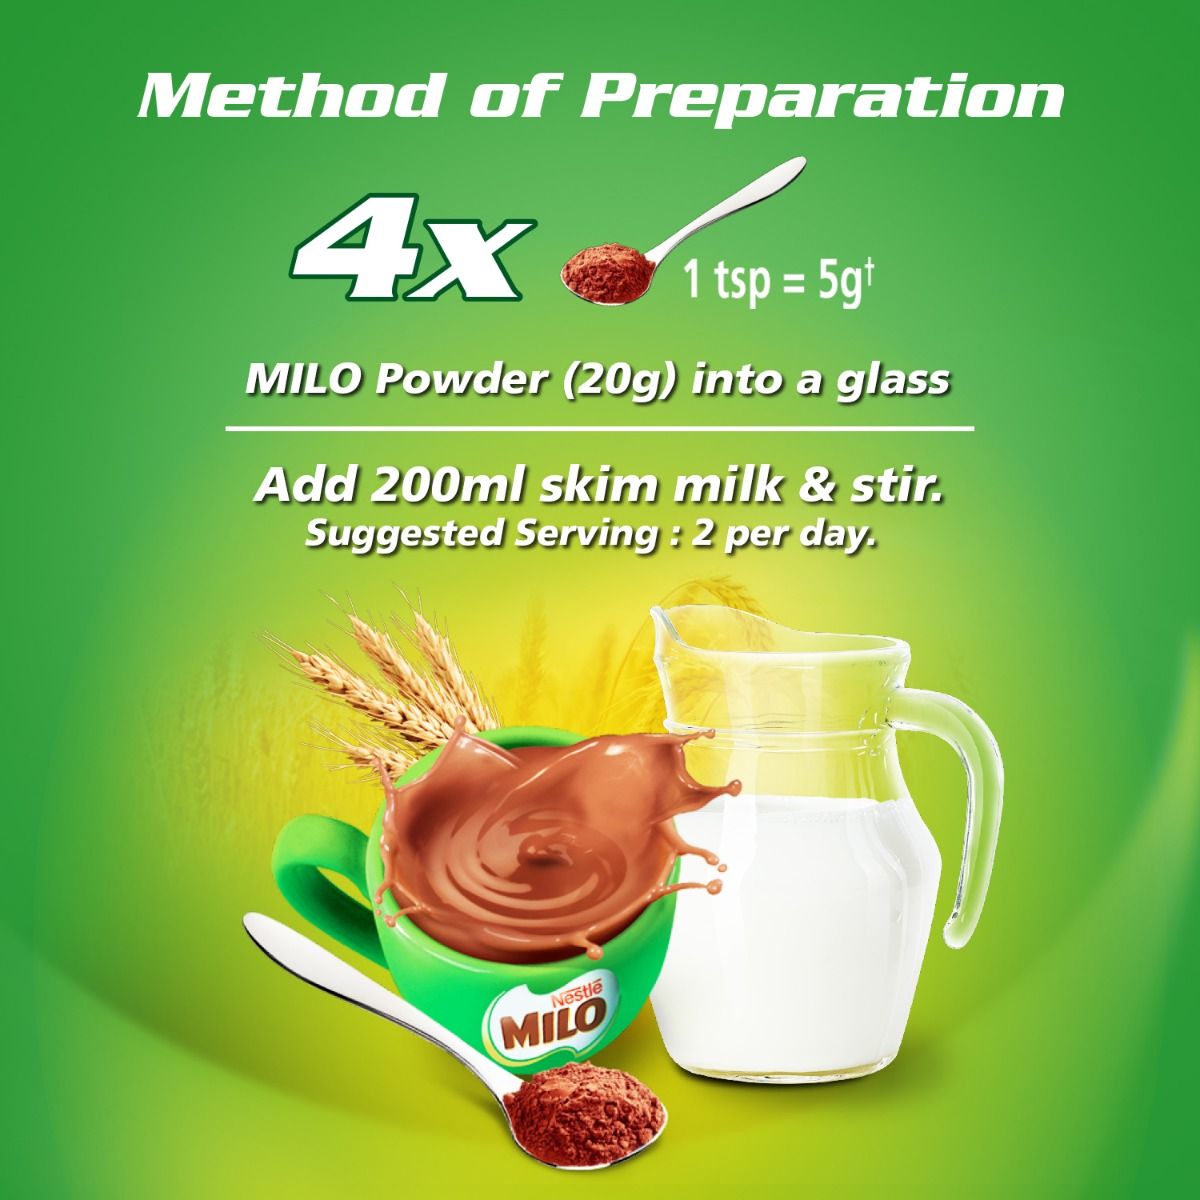 Nestle Milo Activ-Go Health Drink Powder, 400 gm Refill Pack, Pack of 1 